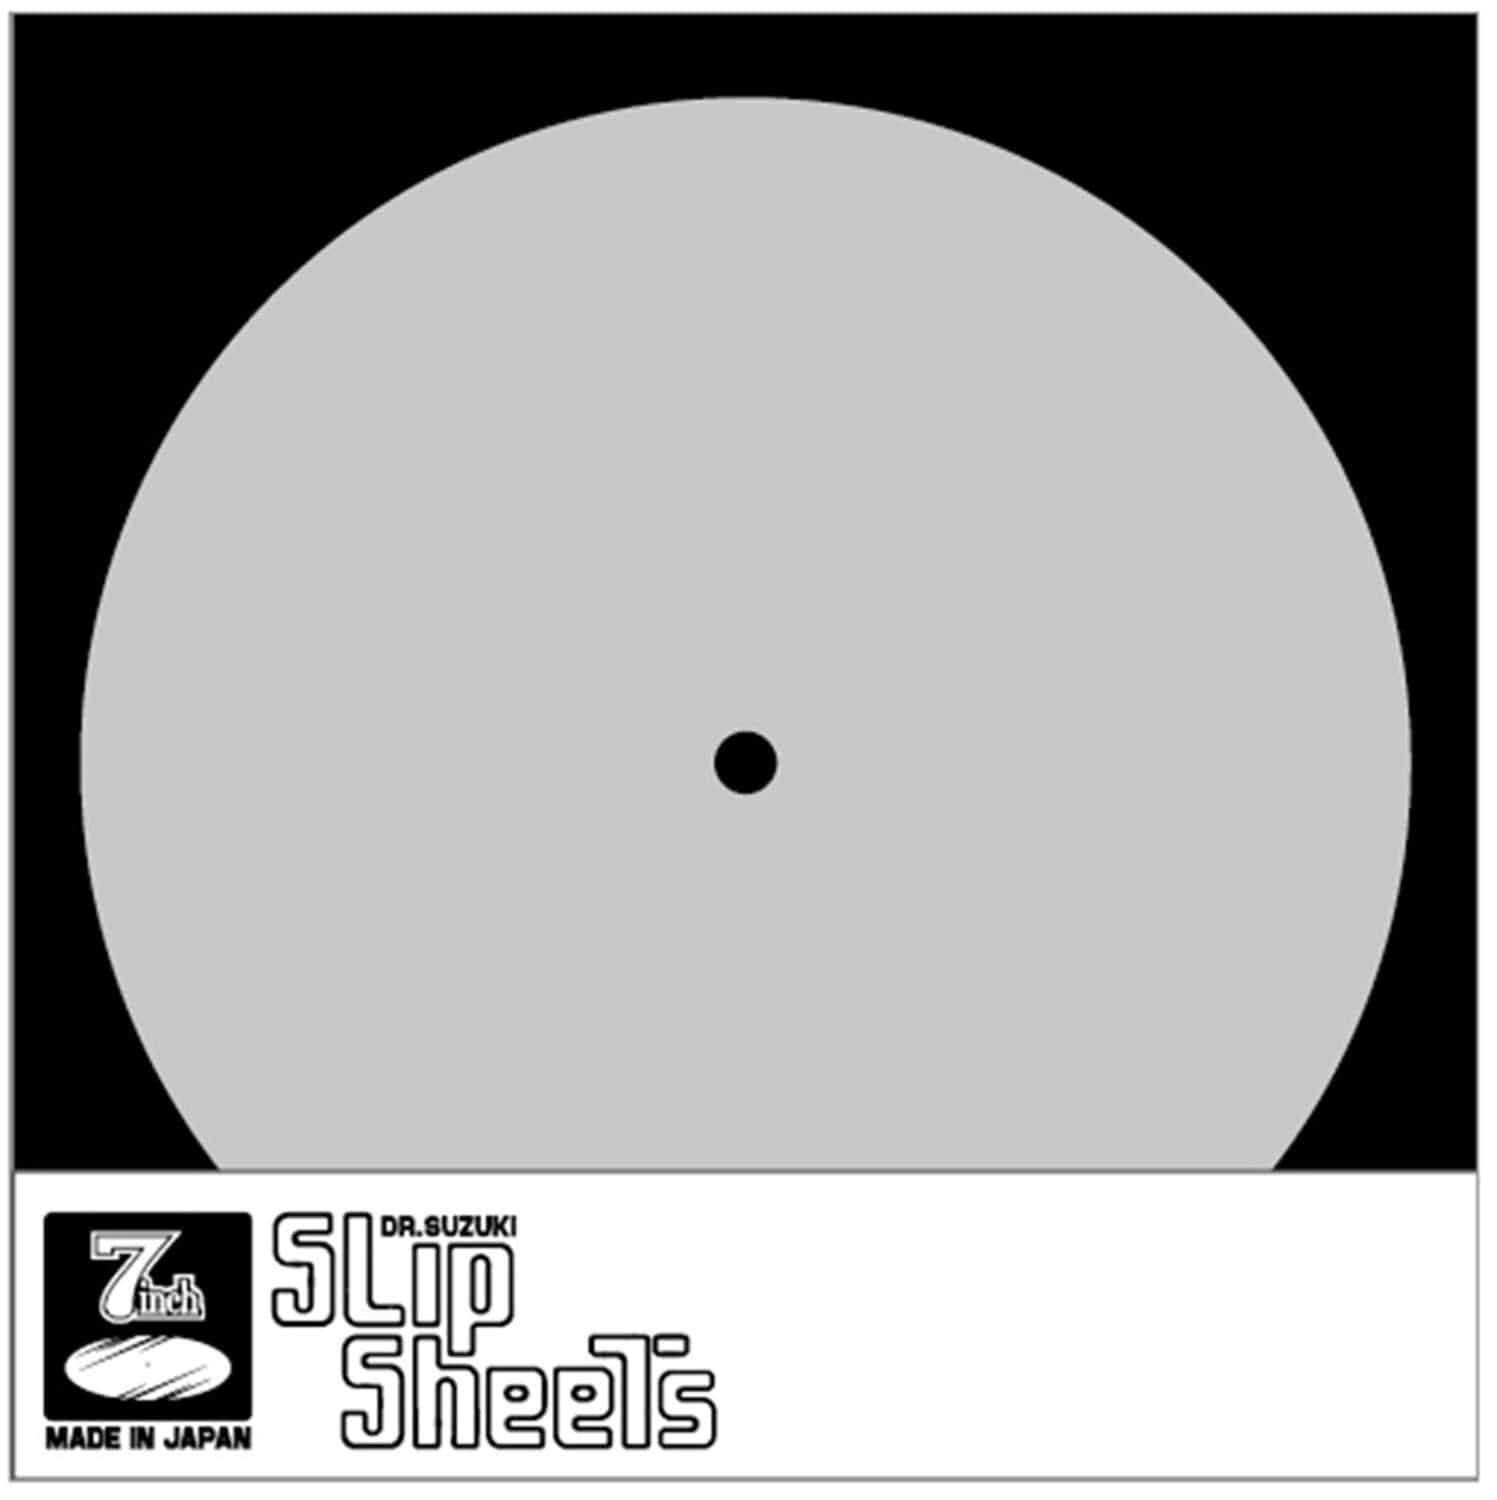 Dr. Suzuki 7-Inch Slip Sheets (4-Pack) - ProSound and Stage Lighting